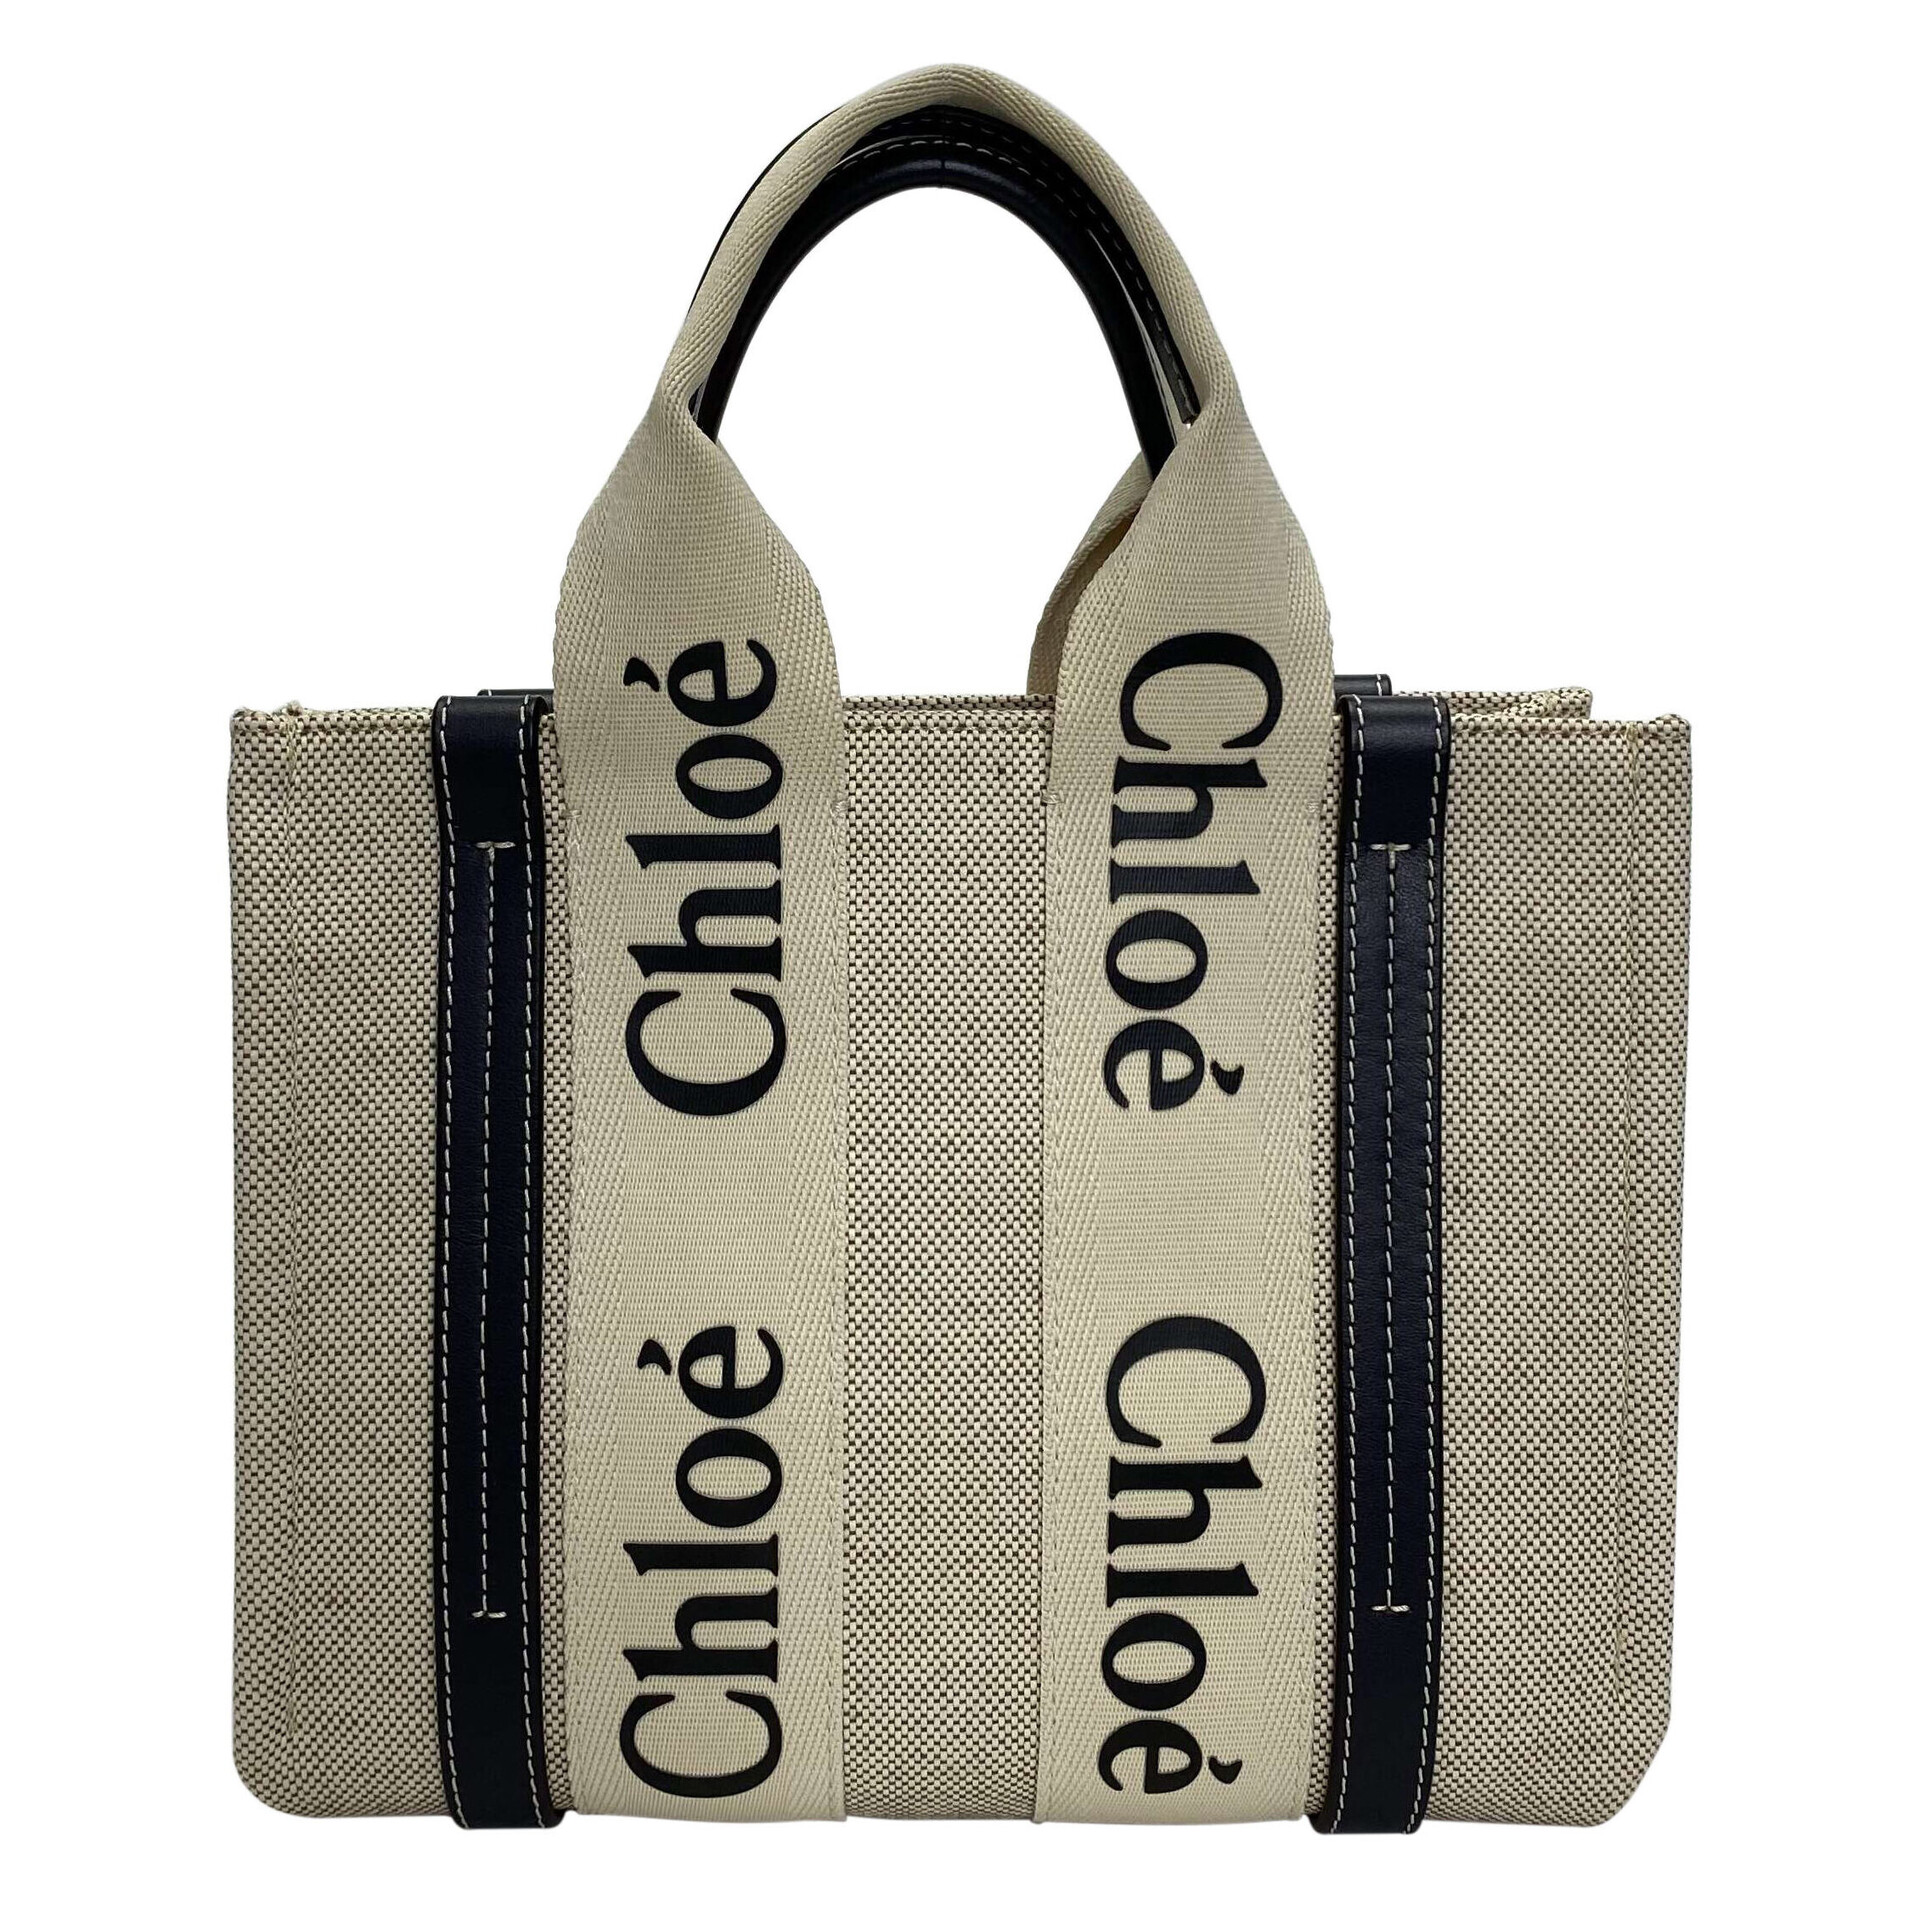 Bolsa Chloe Tote Woody - Pequena